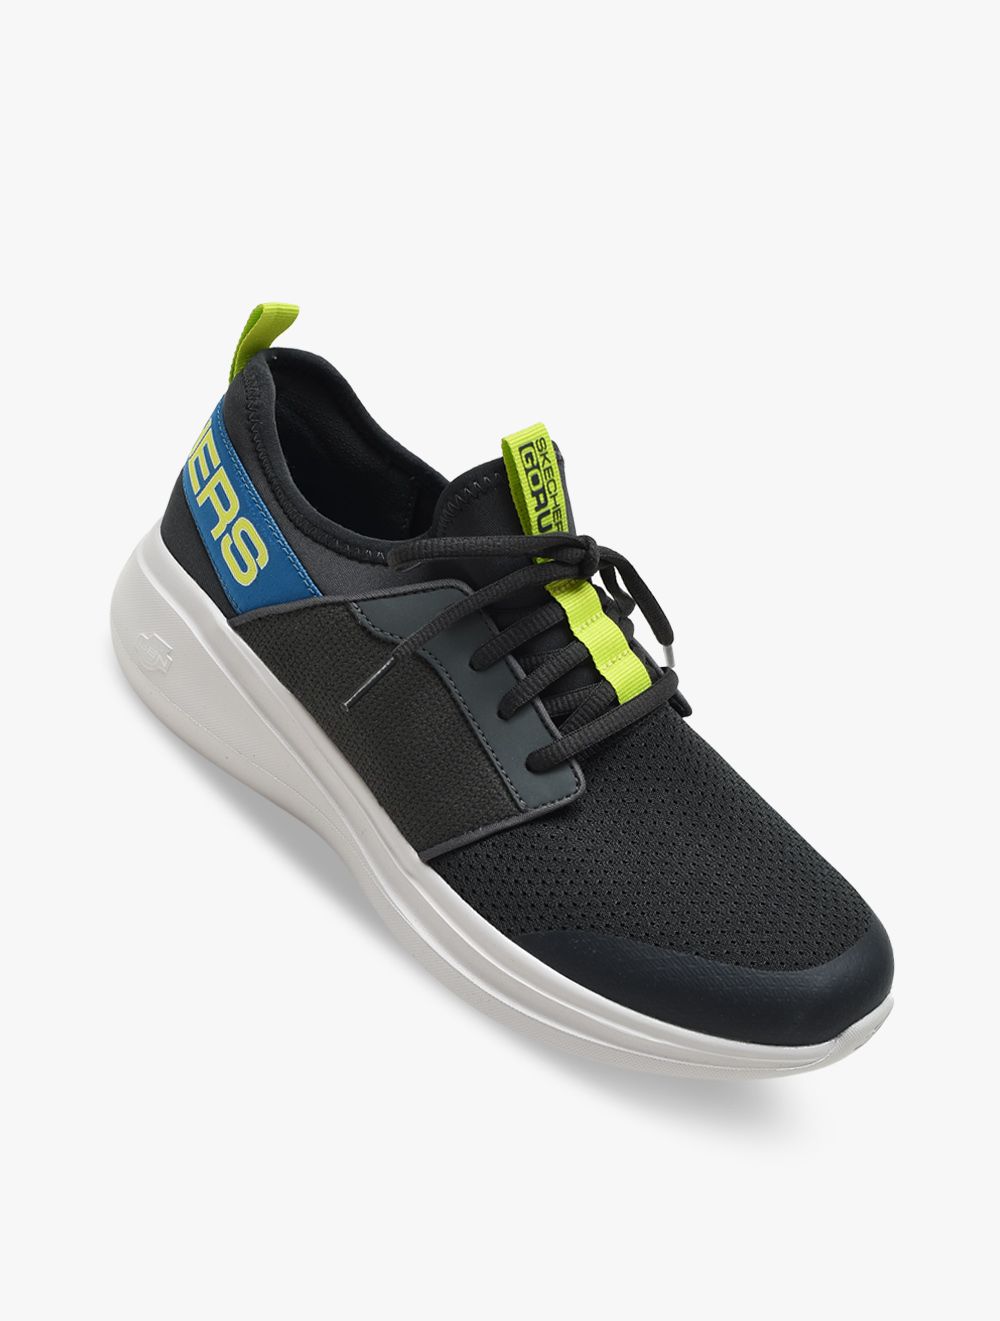 Skechers GOrun Fast Steadfast Mens Running Shoes Charcoal/Multi